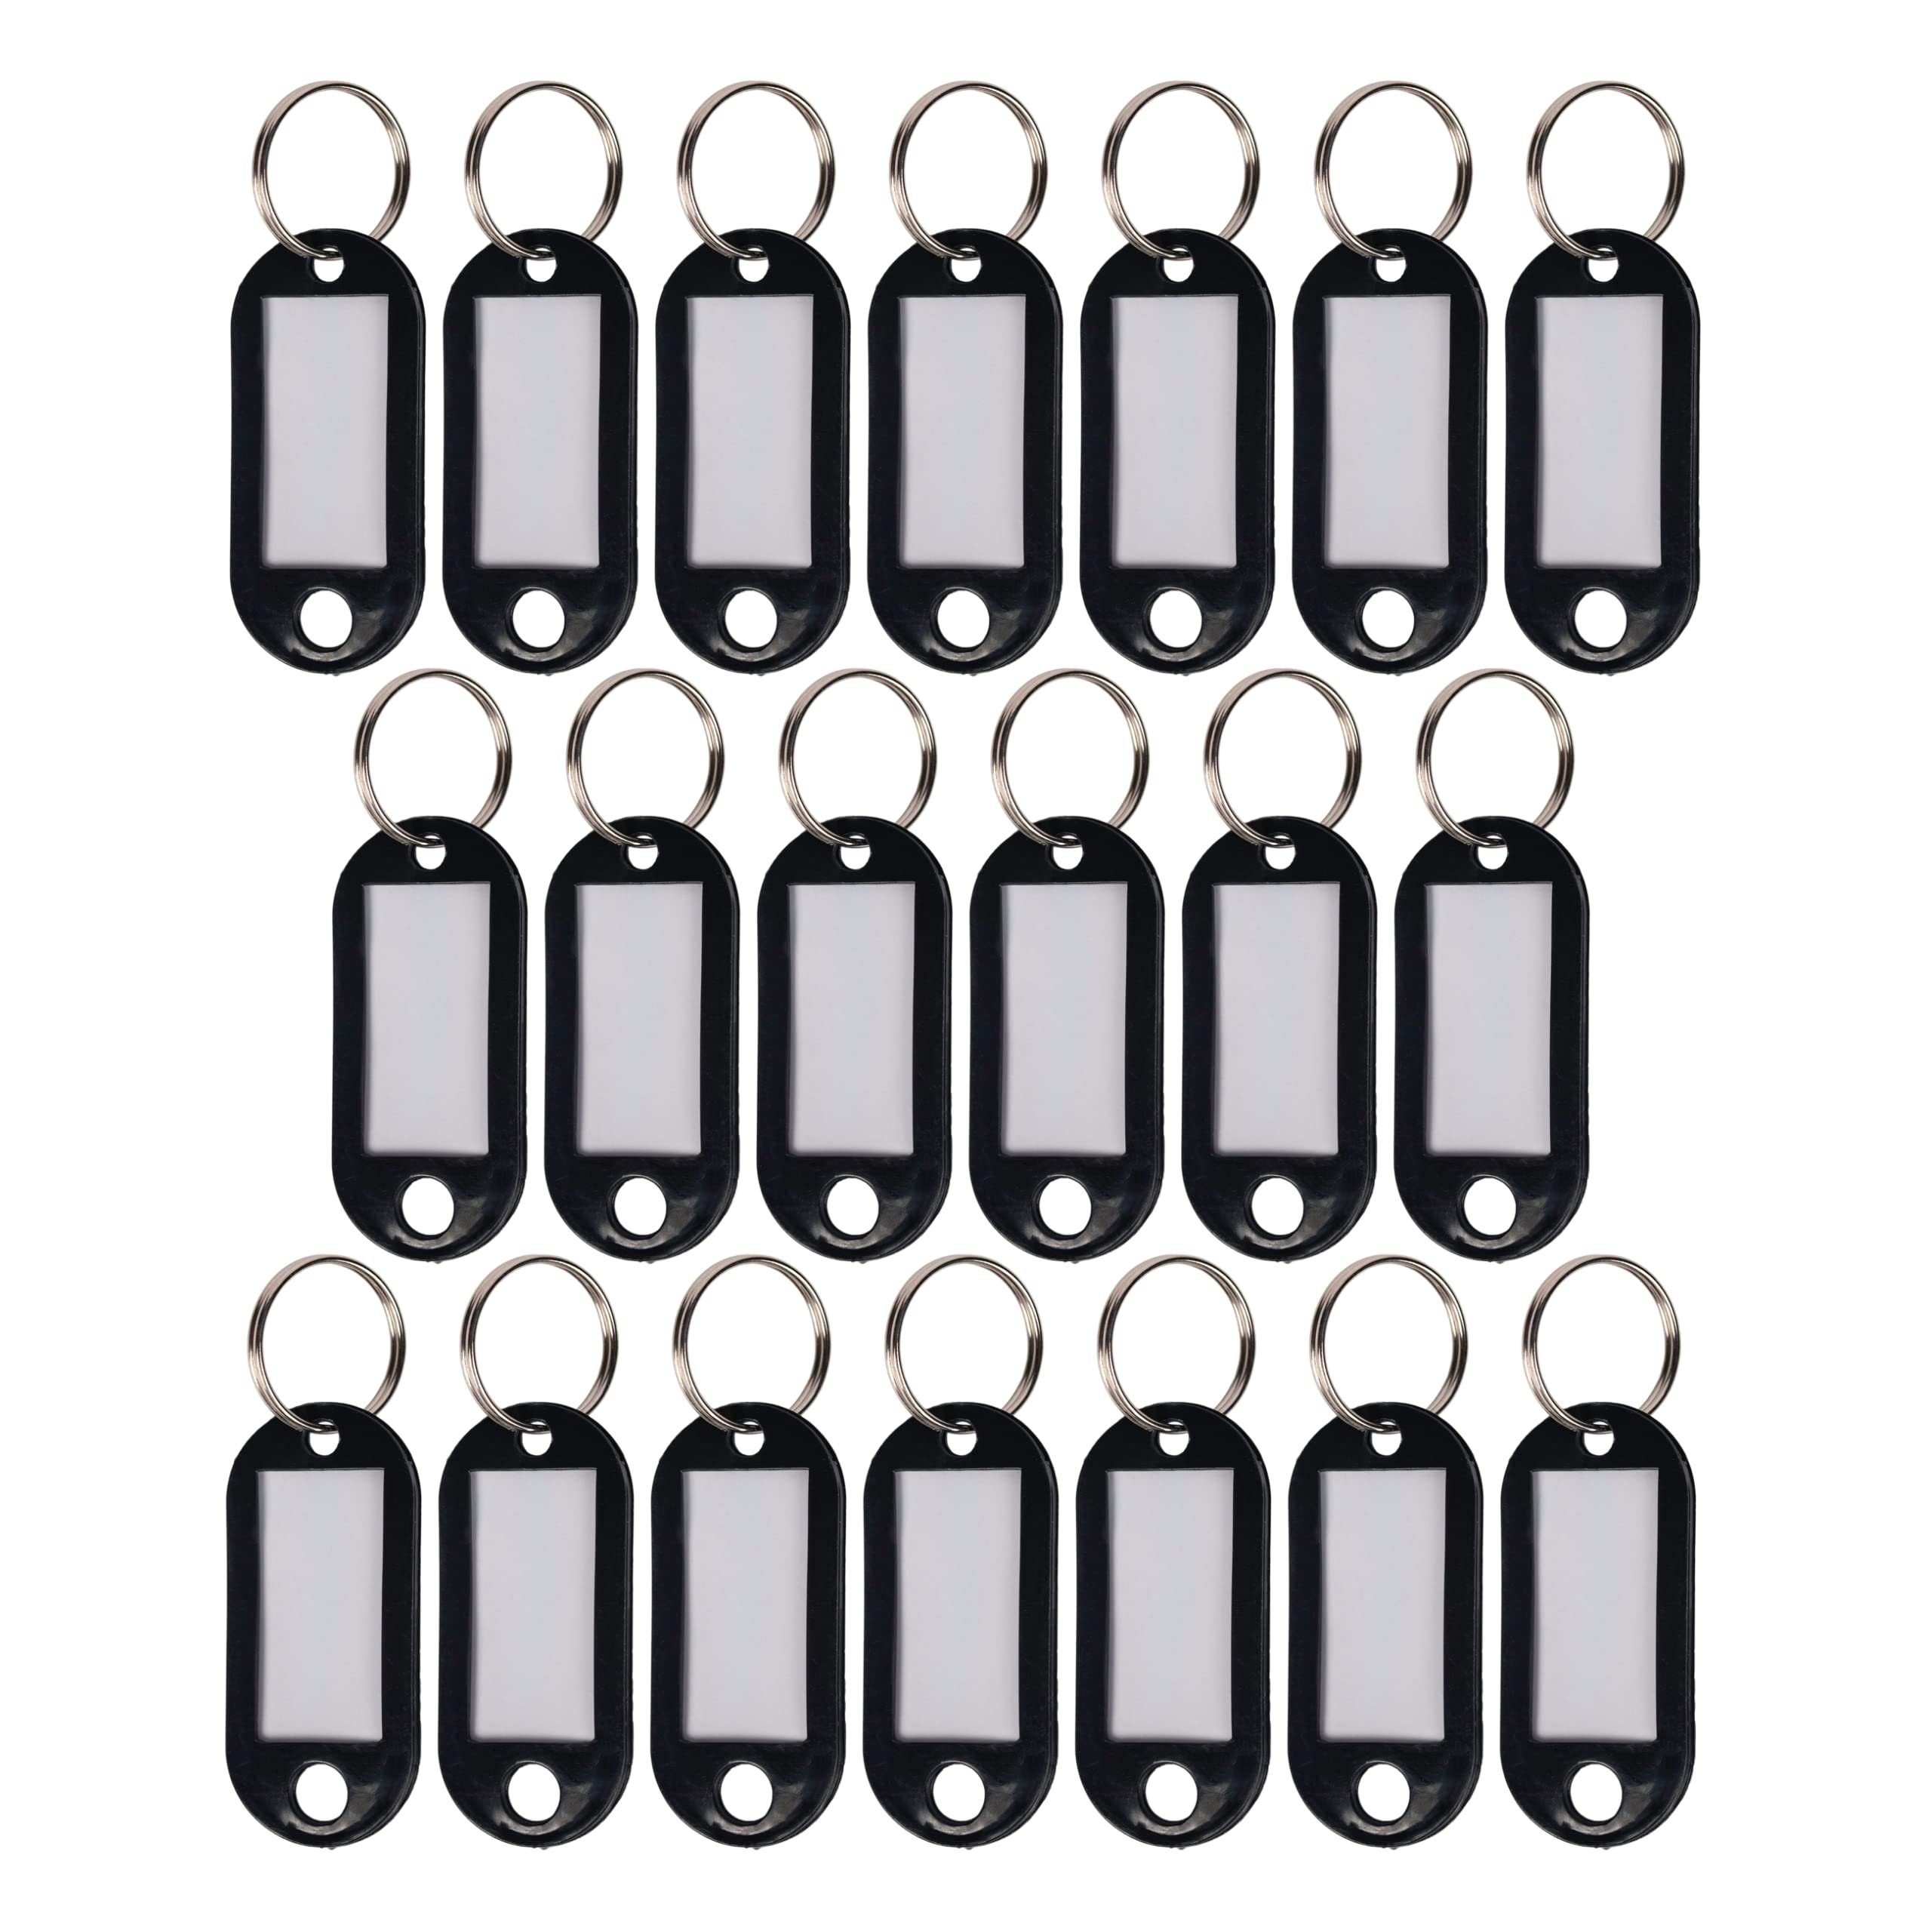 WINTEX Schlüsselanhänger Schwarze Schlüsselanhänger mit Etiketten Wintex 20x - beschriftbar